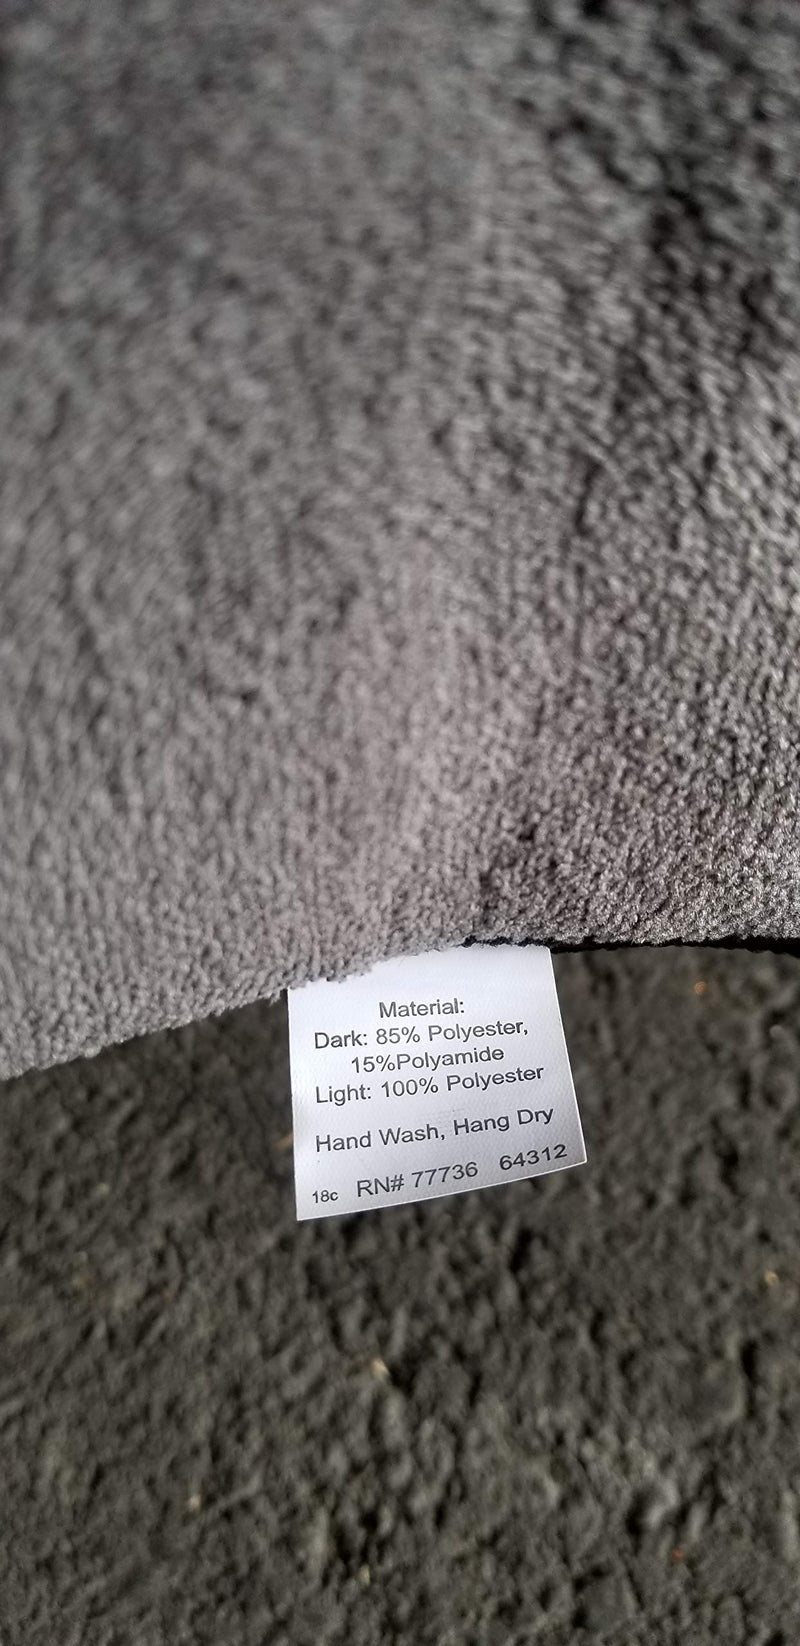  [AUSTRALIA] - Grant's Premium XL Plush Drying Towel (6 Square Feet) 29-3/4" x 29-1/2" - Ultra Absorbent All-Purpose Lint-Free Scratch-Free Microfiber